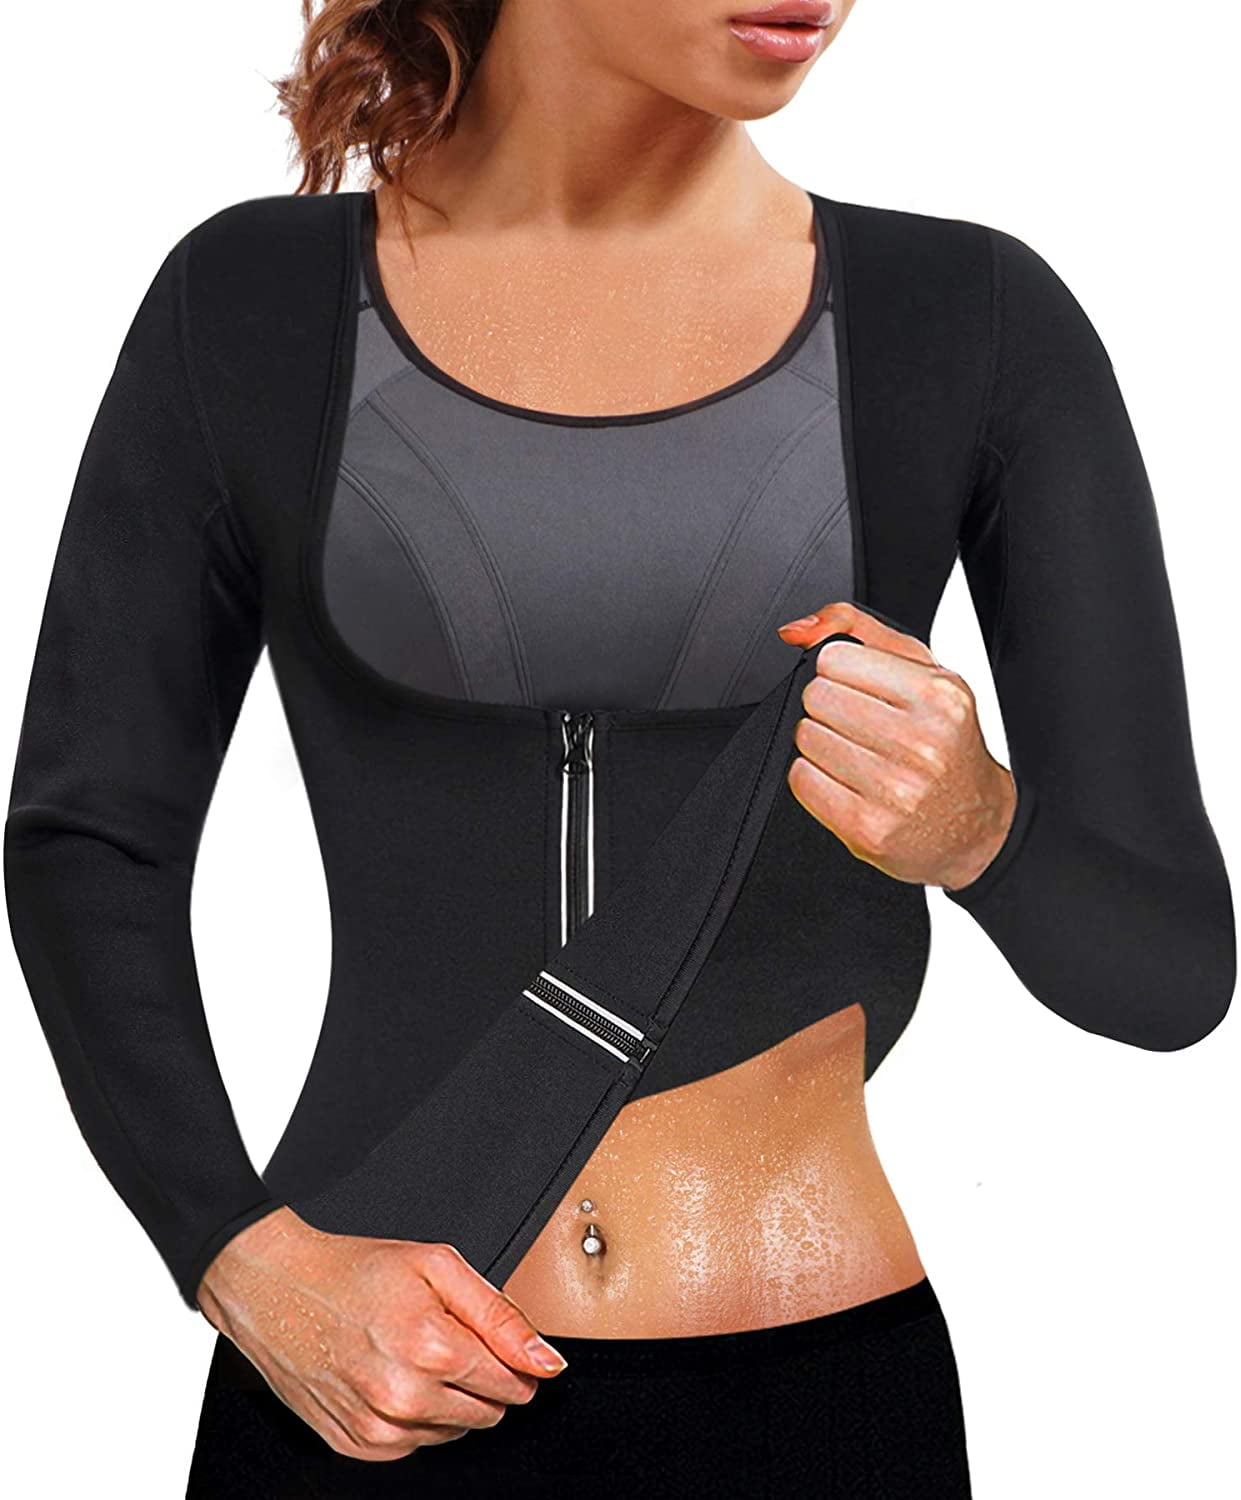 Women Hot Sweat Weight Loss Shirt Neoprene Body Shaper Sauna Jacket Suit Workout 